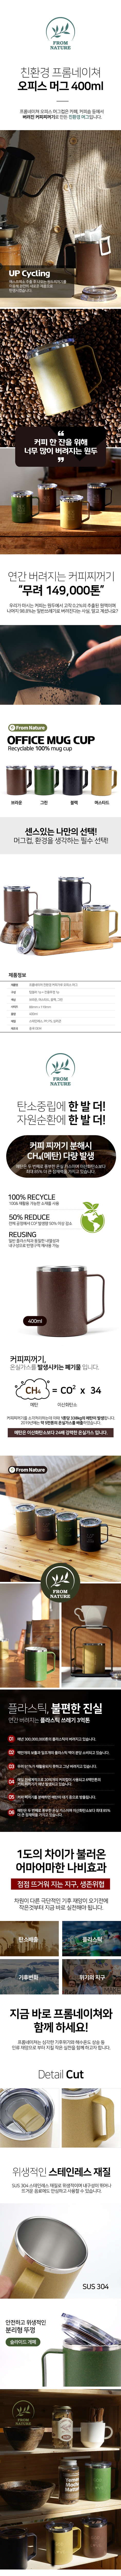 Coffee-mug_01.jpg